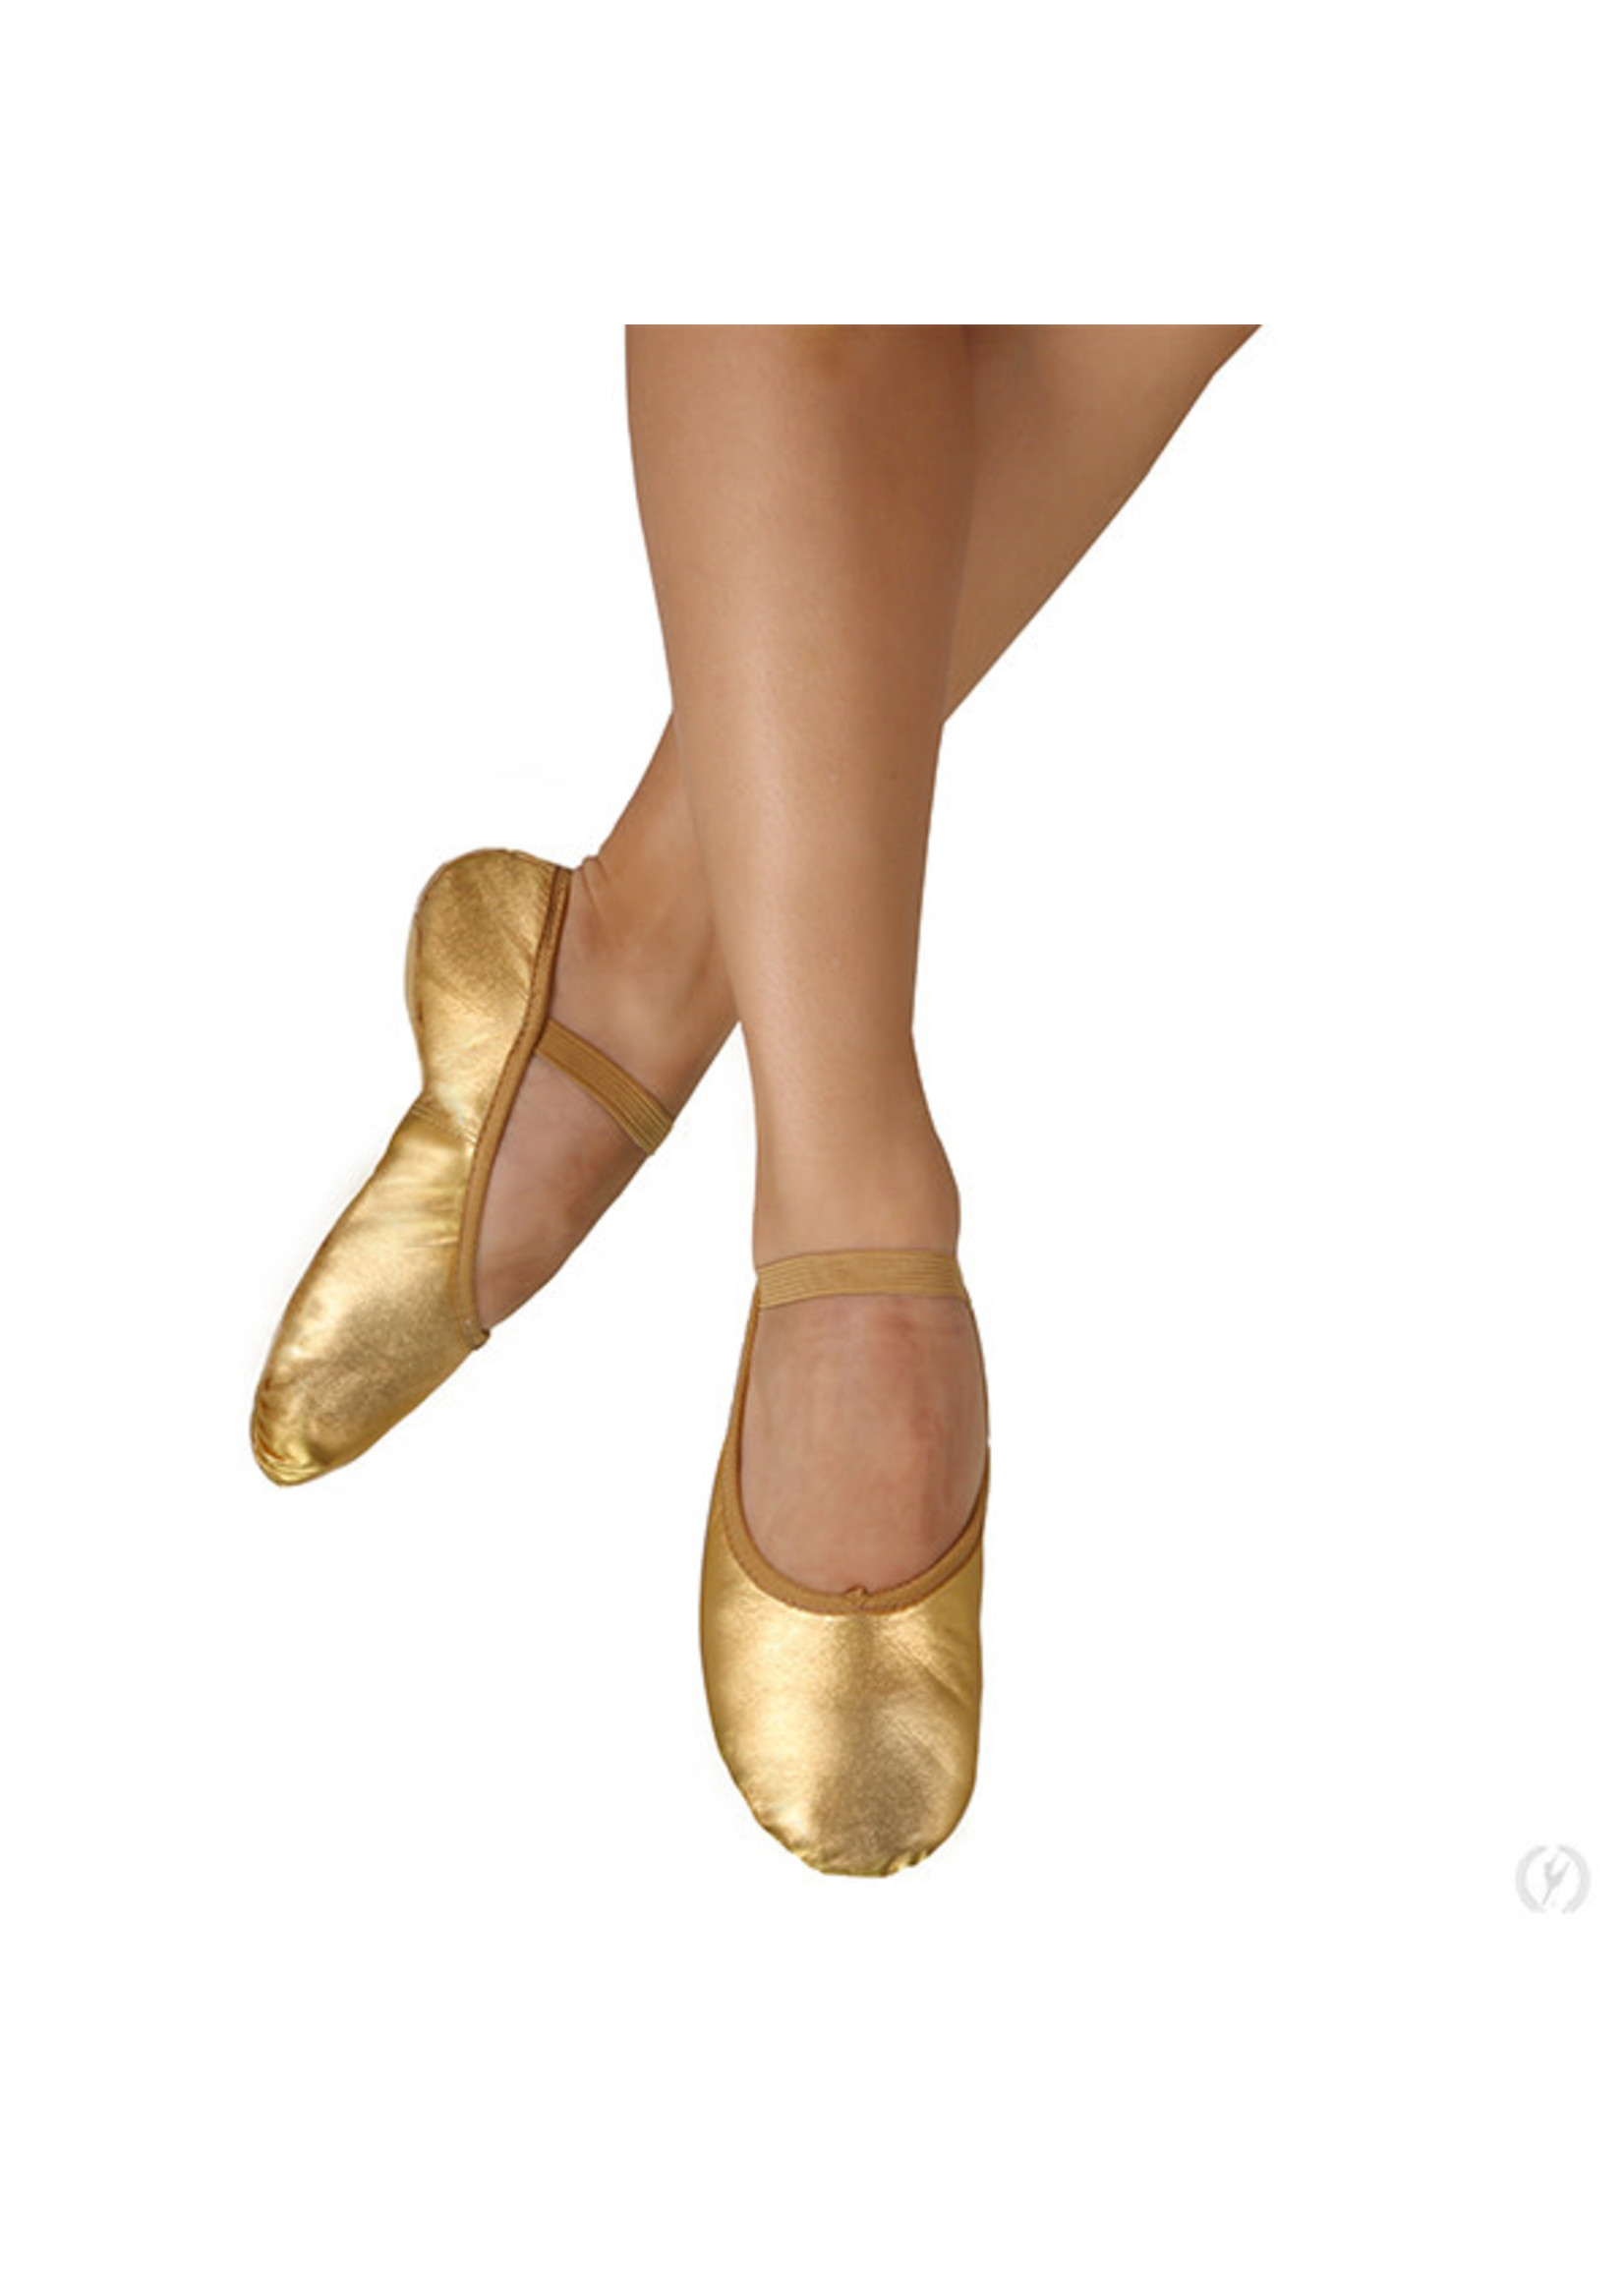 Adult Tendu Full Sole Leather Ballet Shoes